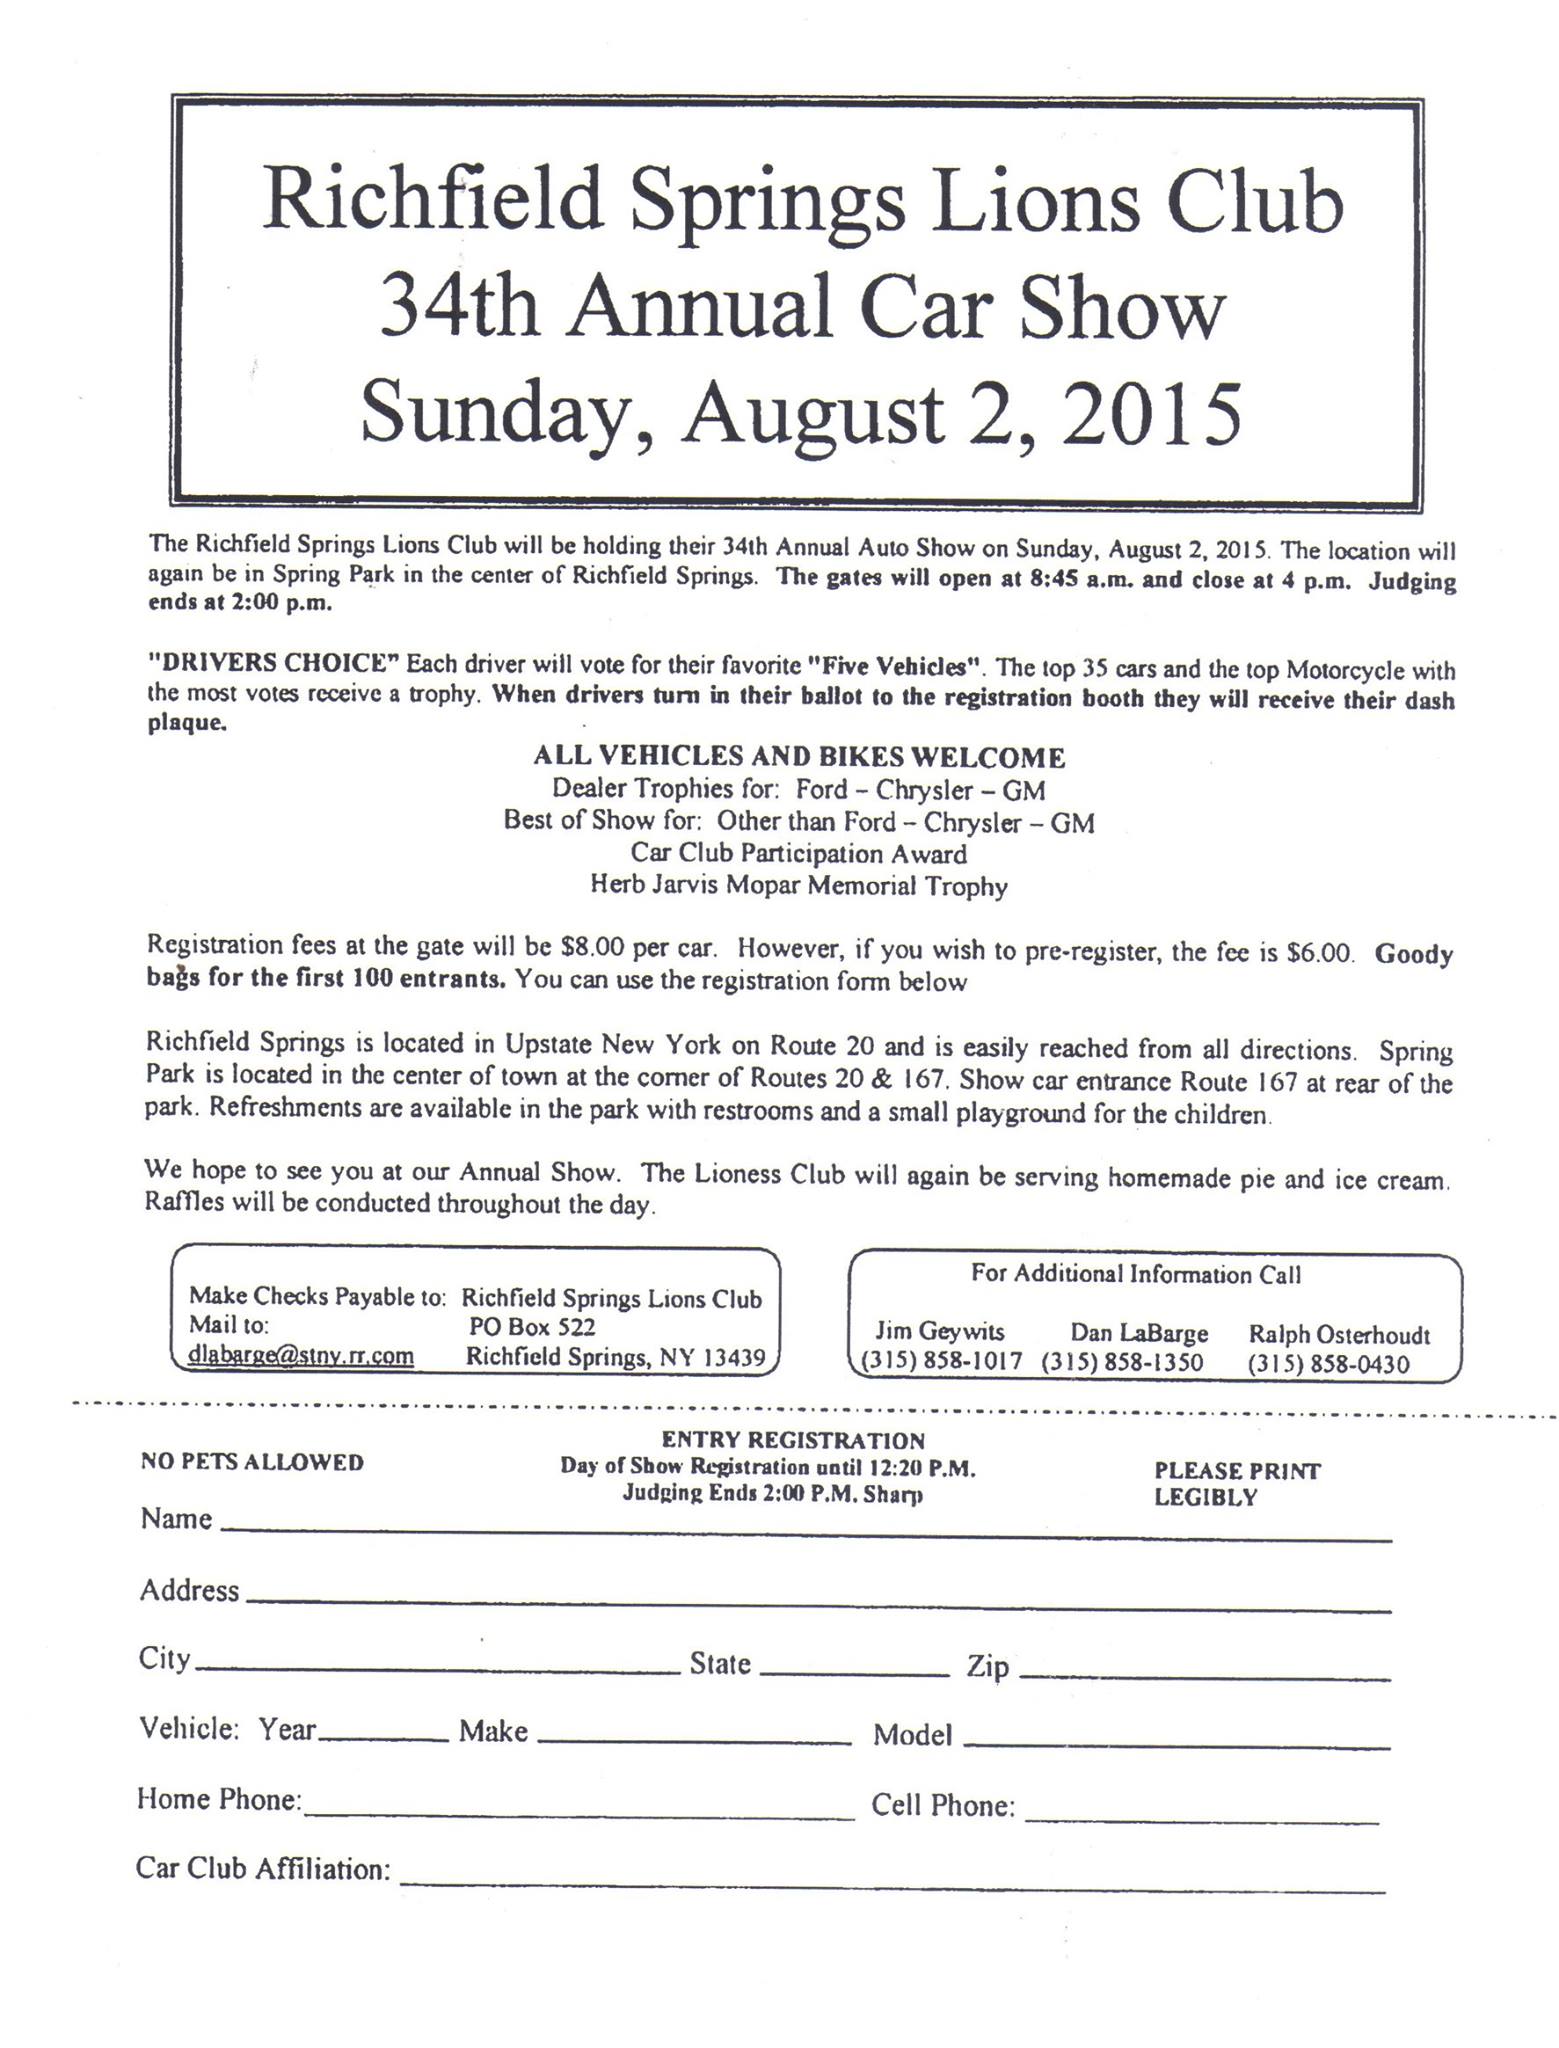 Richfield Springs Lions Club 34th Annual Car Show Apex Automotive